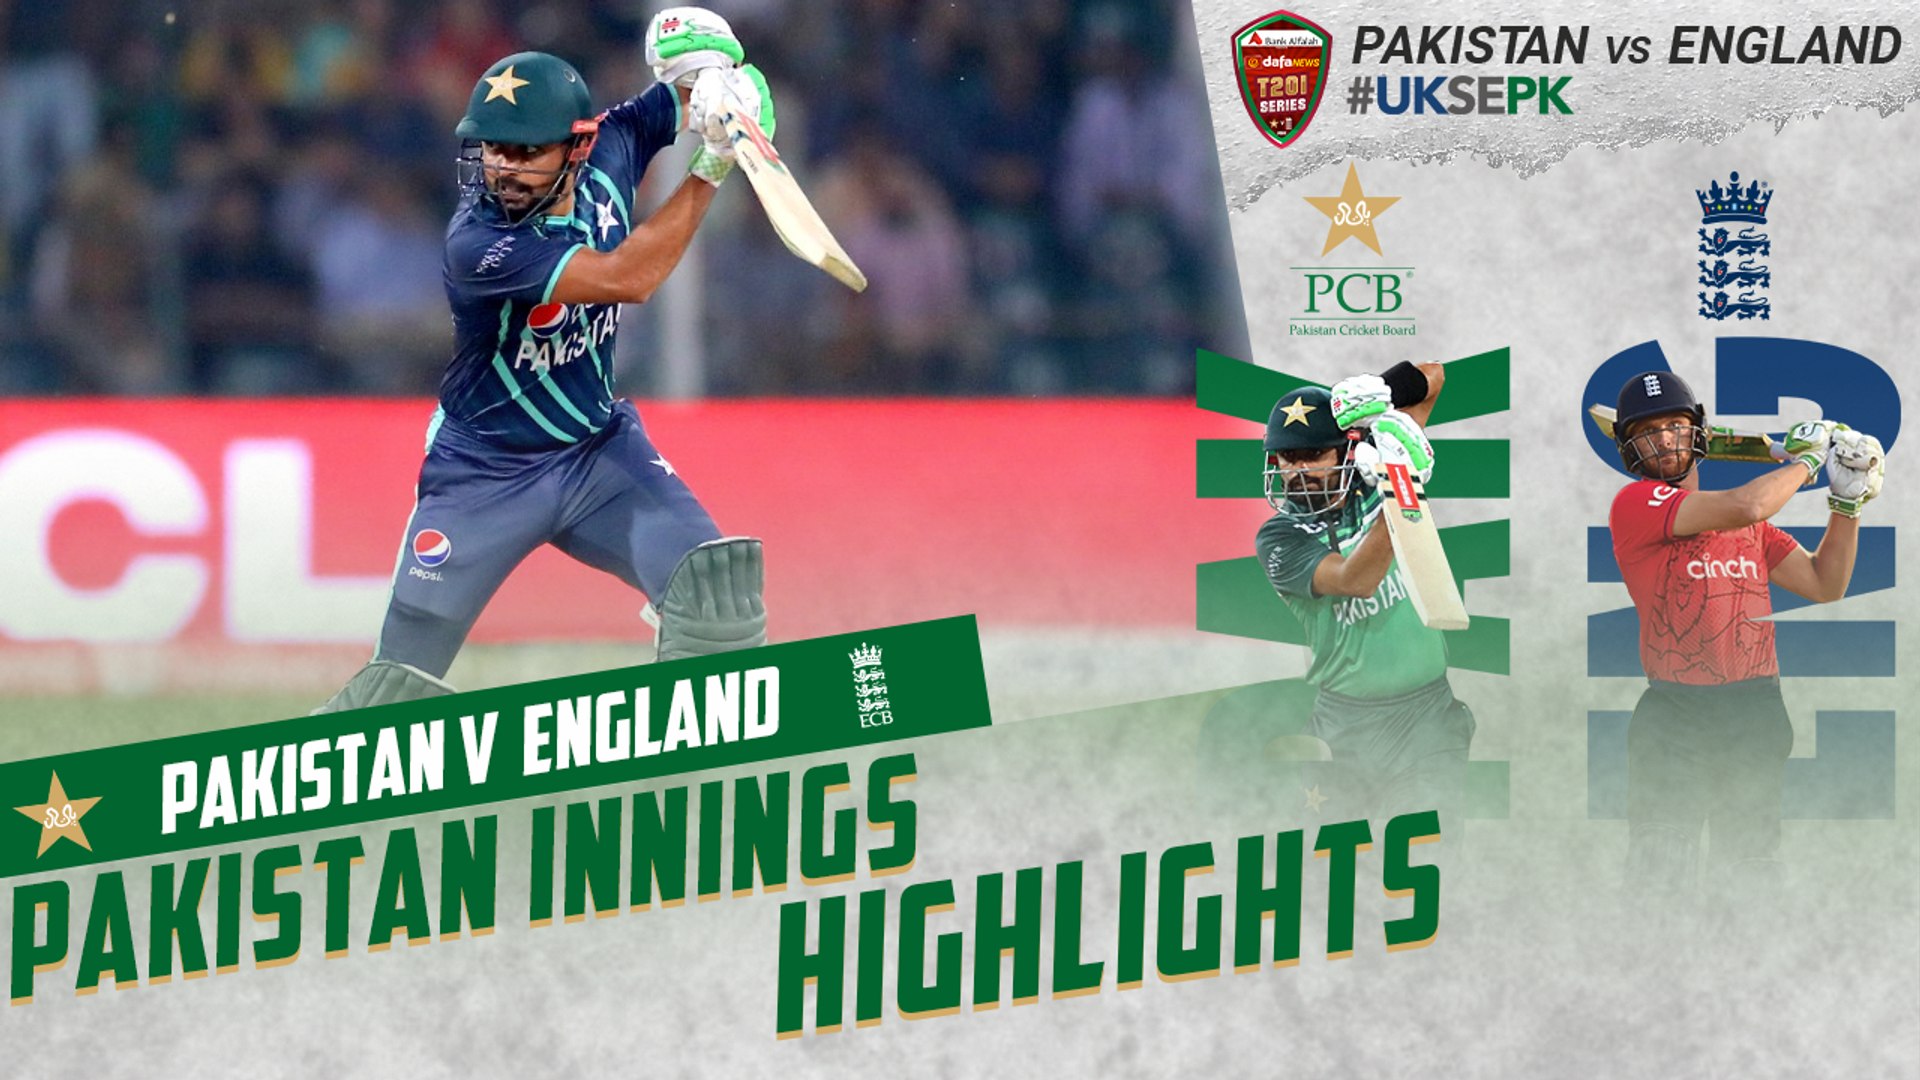 Pakistan Innings Highlights | Pakistan vs England | 6th T20I 2022 | PCB |  MU2T - video Dailymotion